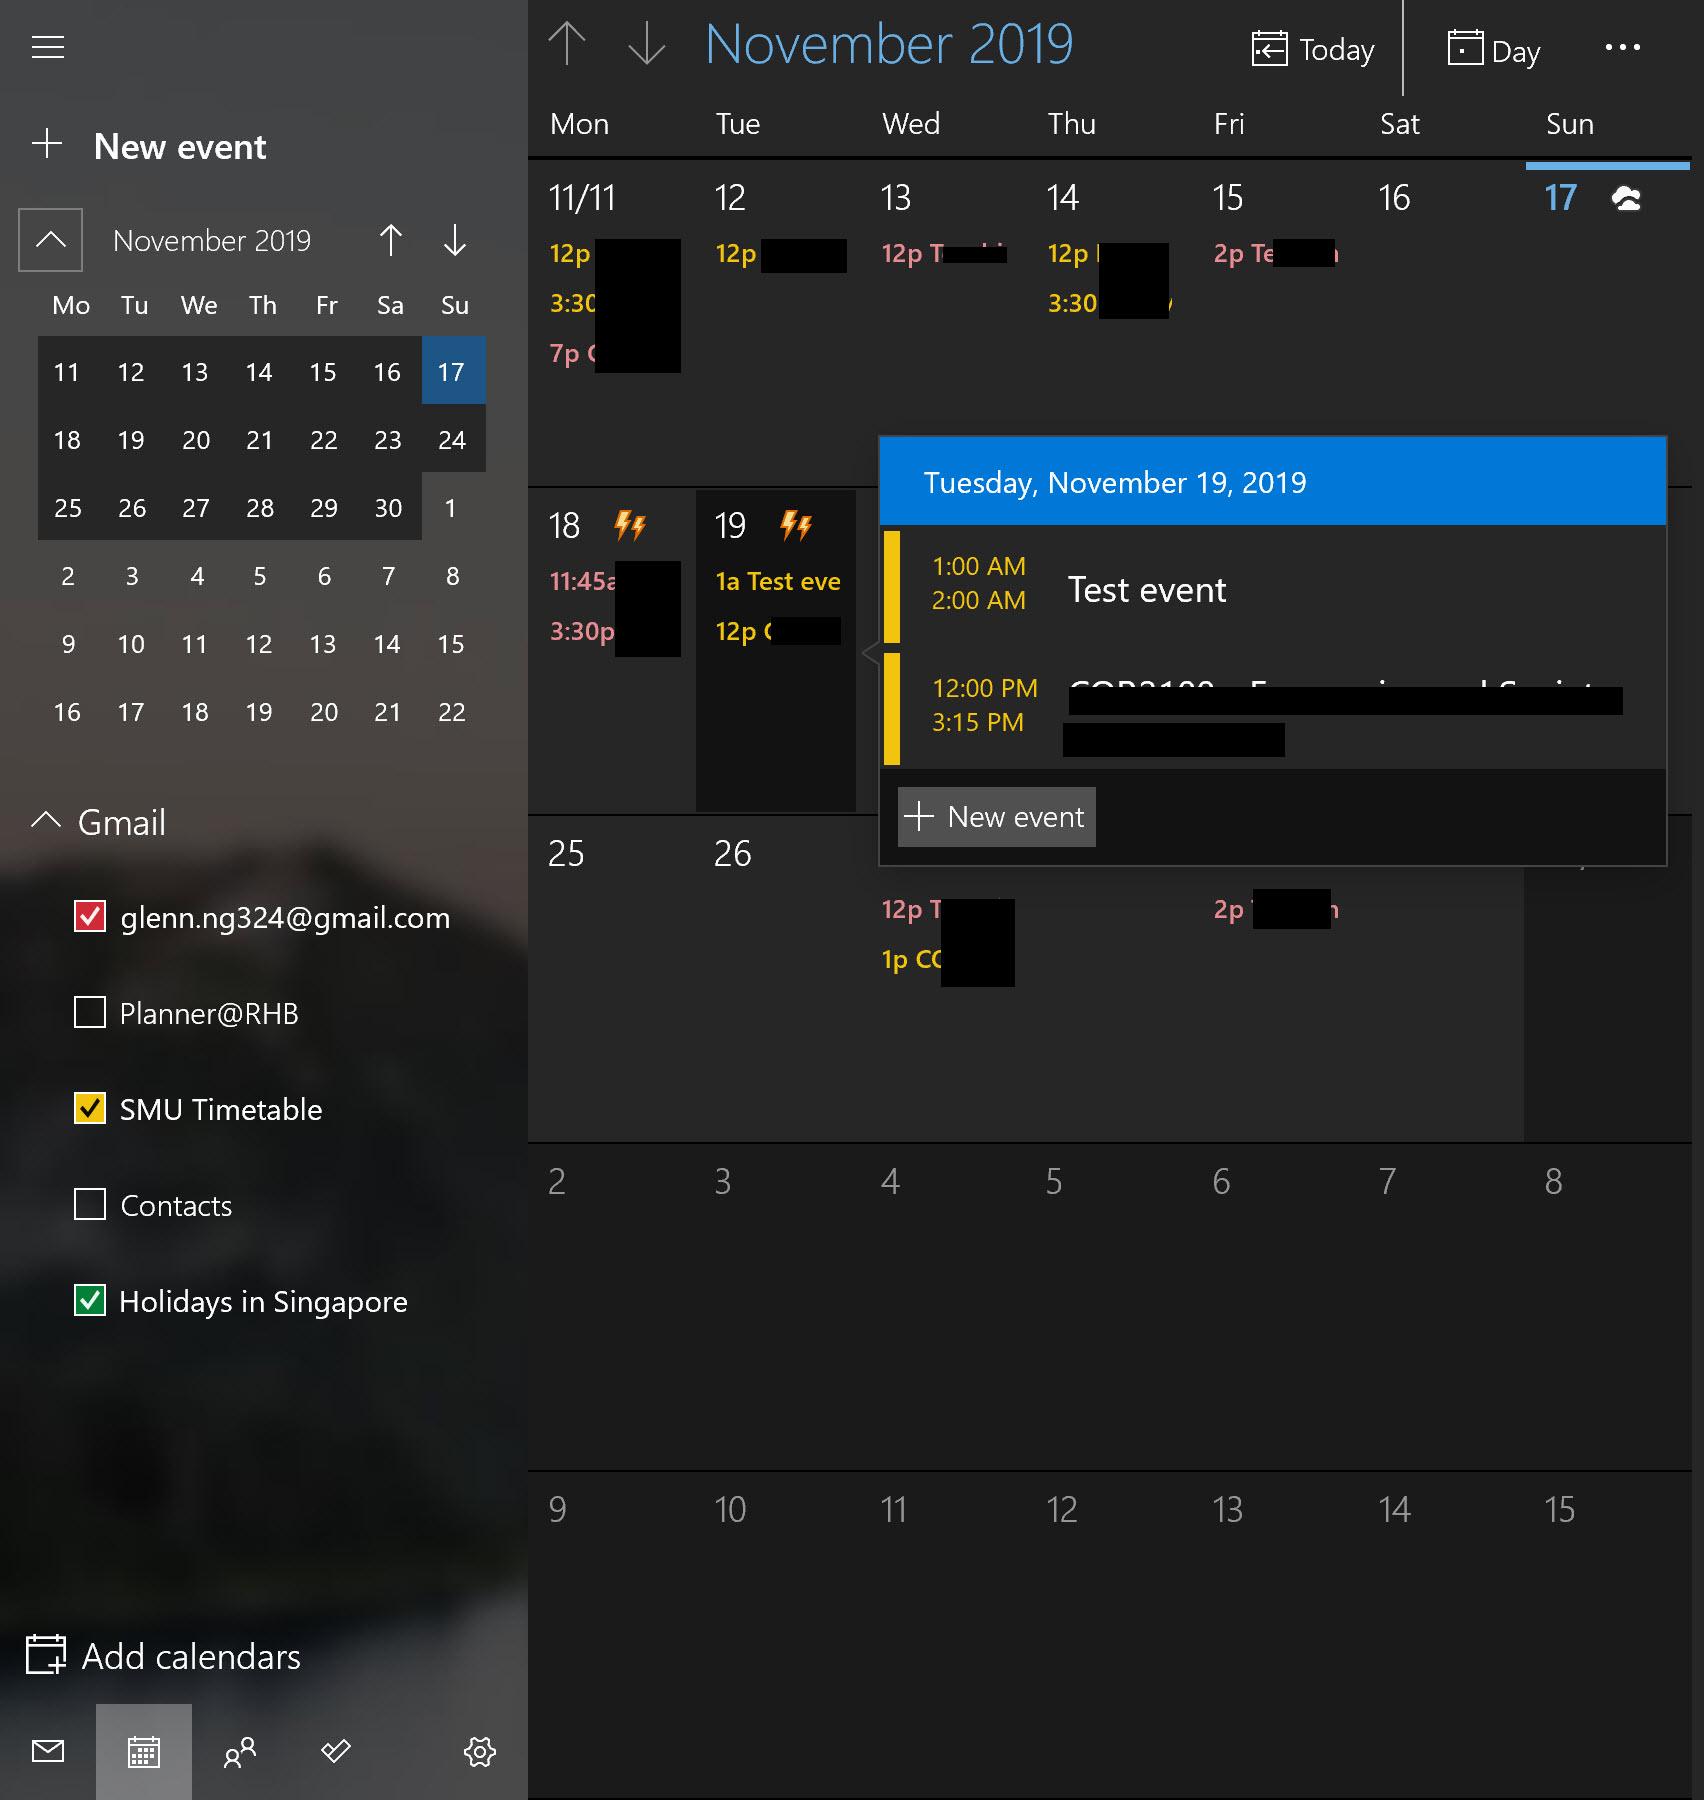 Windows 10 agenda doesn't show many events (that correctly appear in the calendar) cbae1b33-f521-4ab3-bdaa-596781e216fd?upload=true.jpg